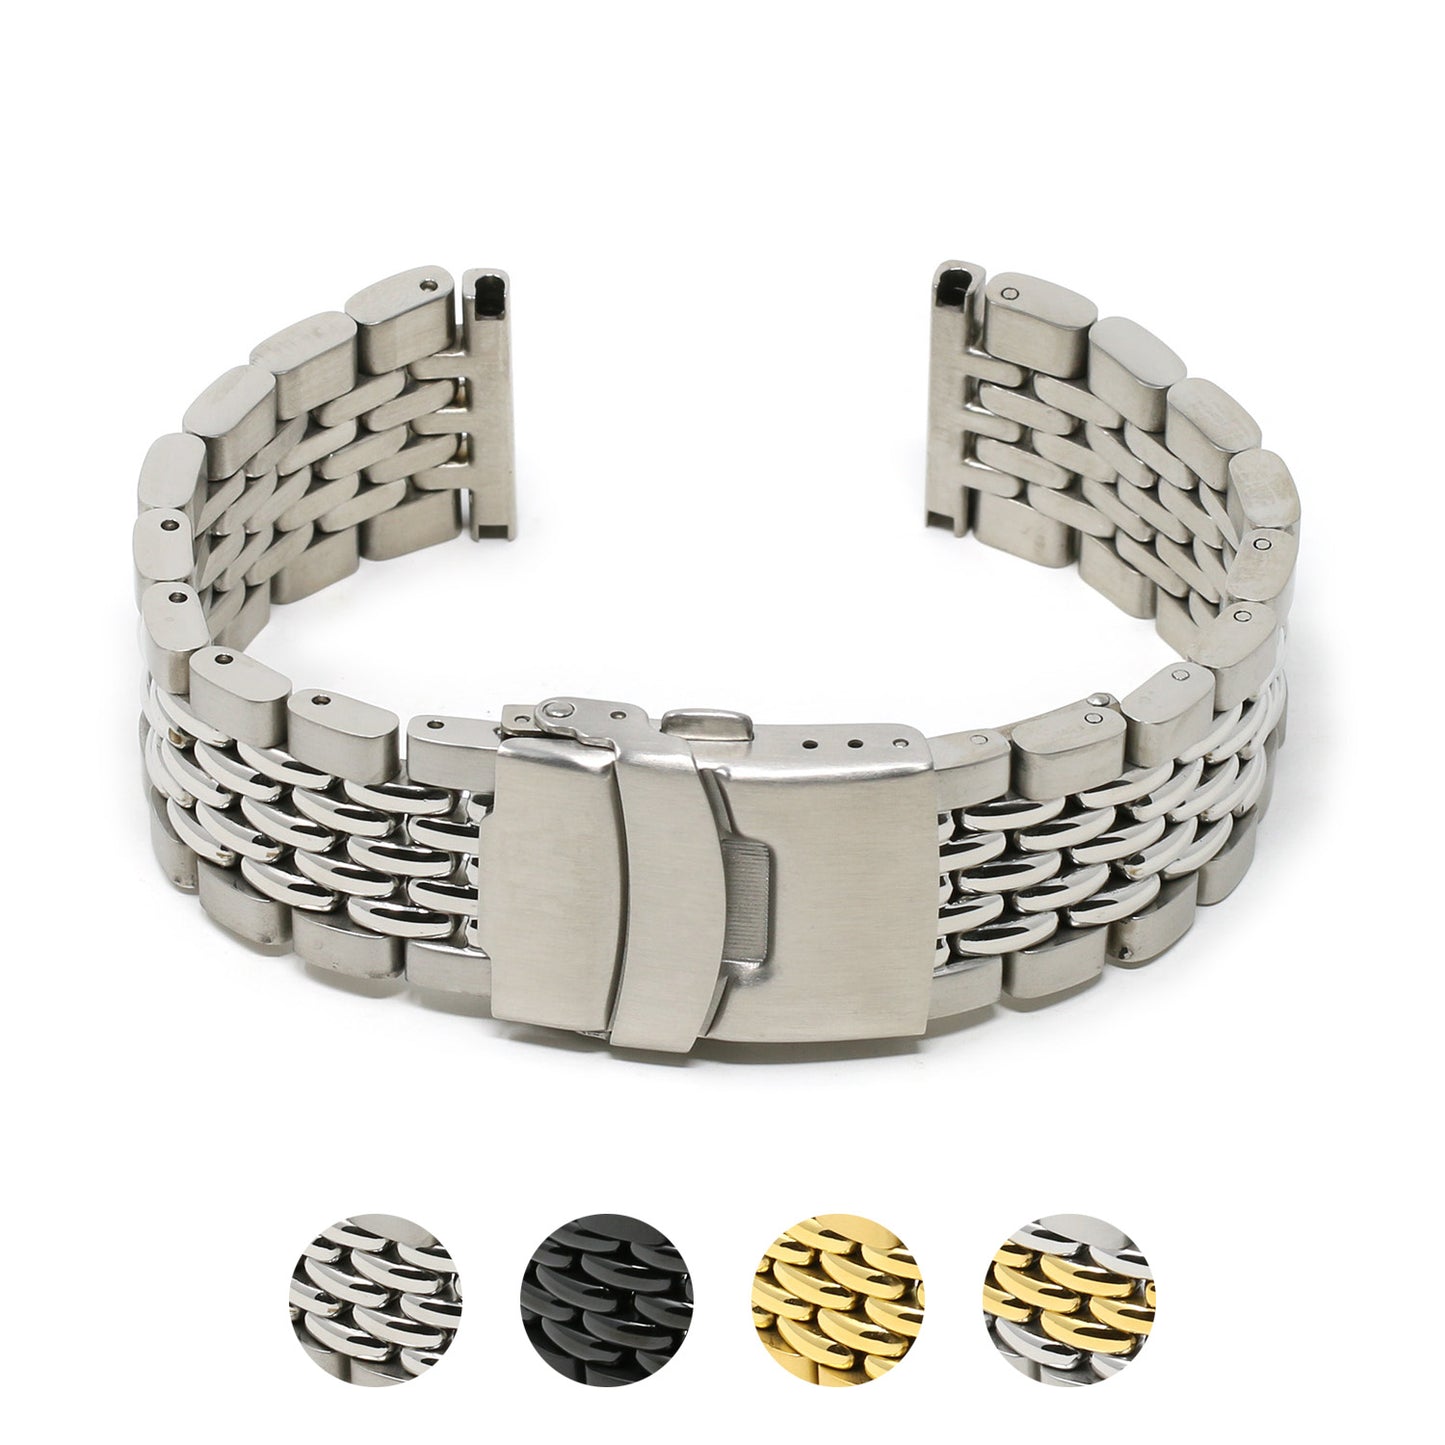 18mm Beads of Rice Smart Watch Bracelet